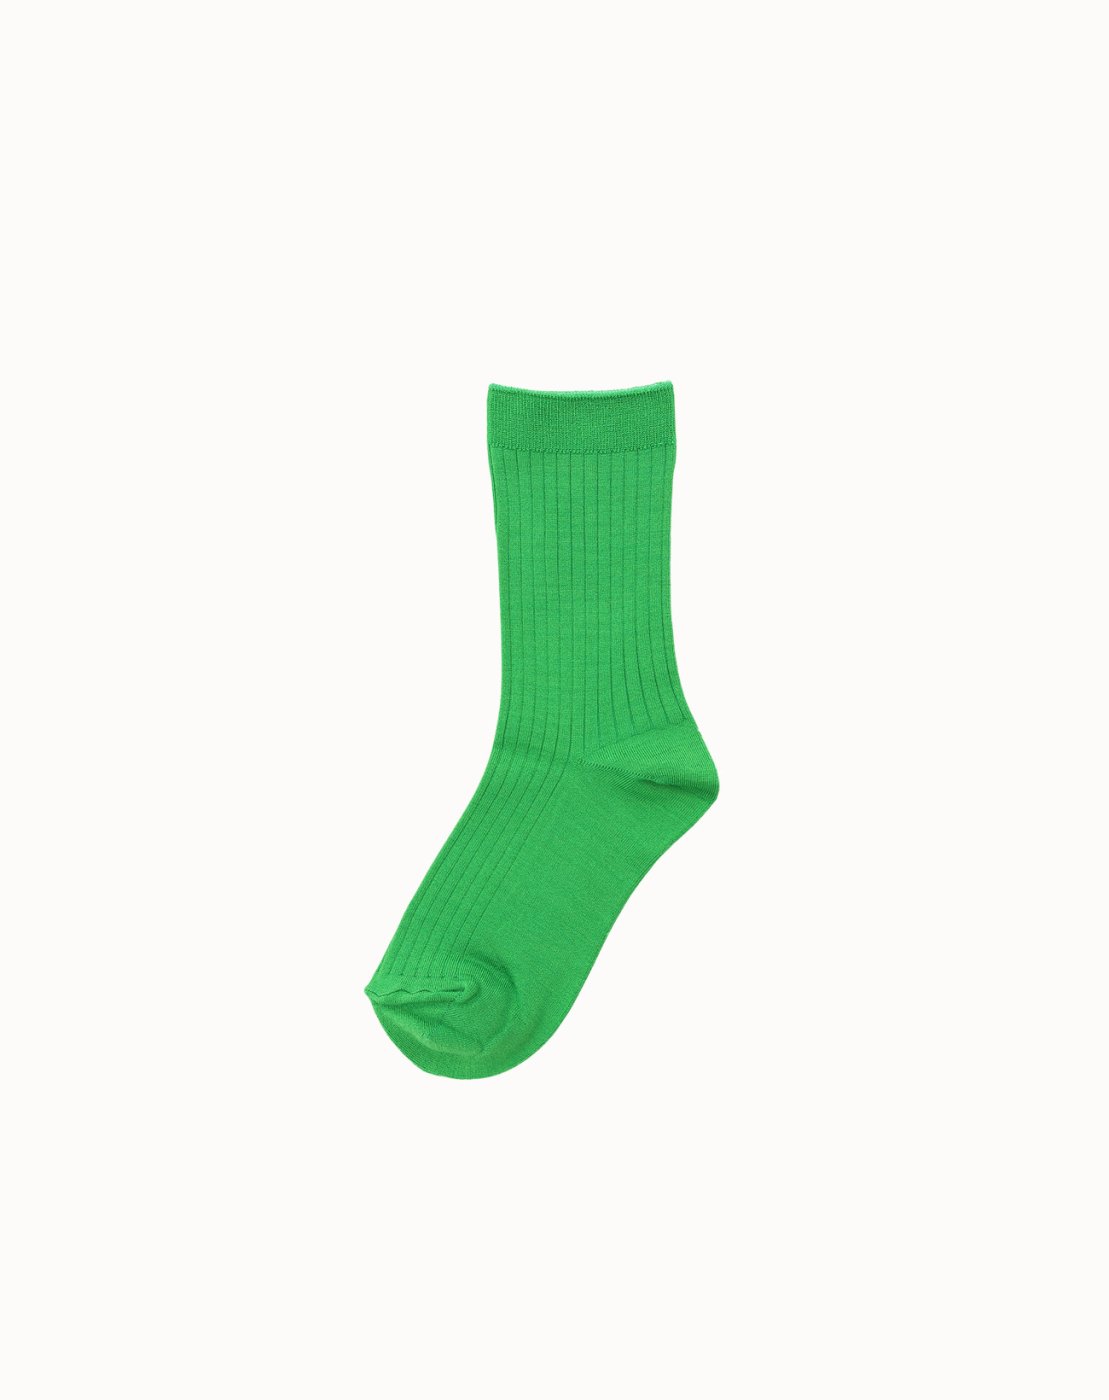 leur logette - Silk Rib Socks - Light Green